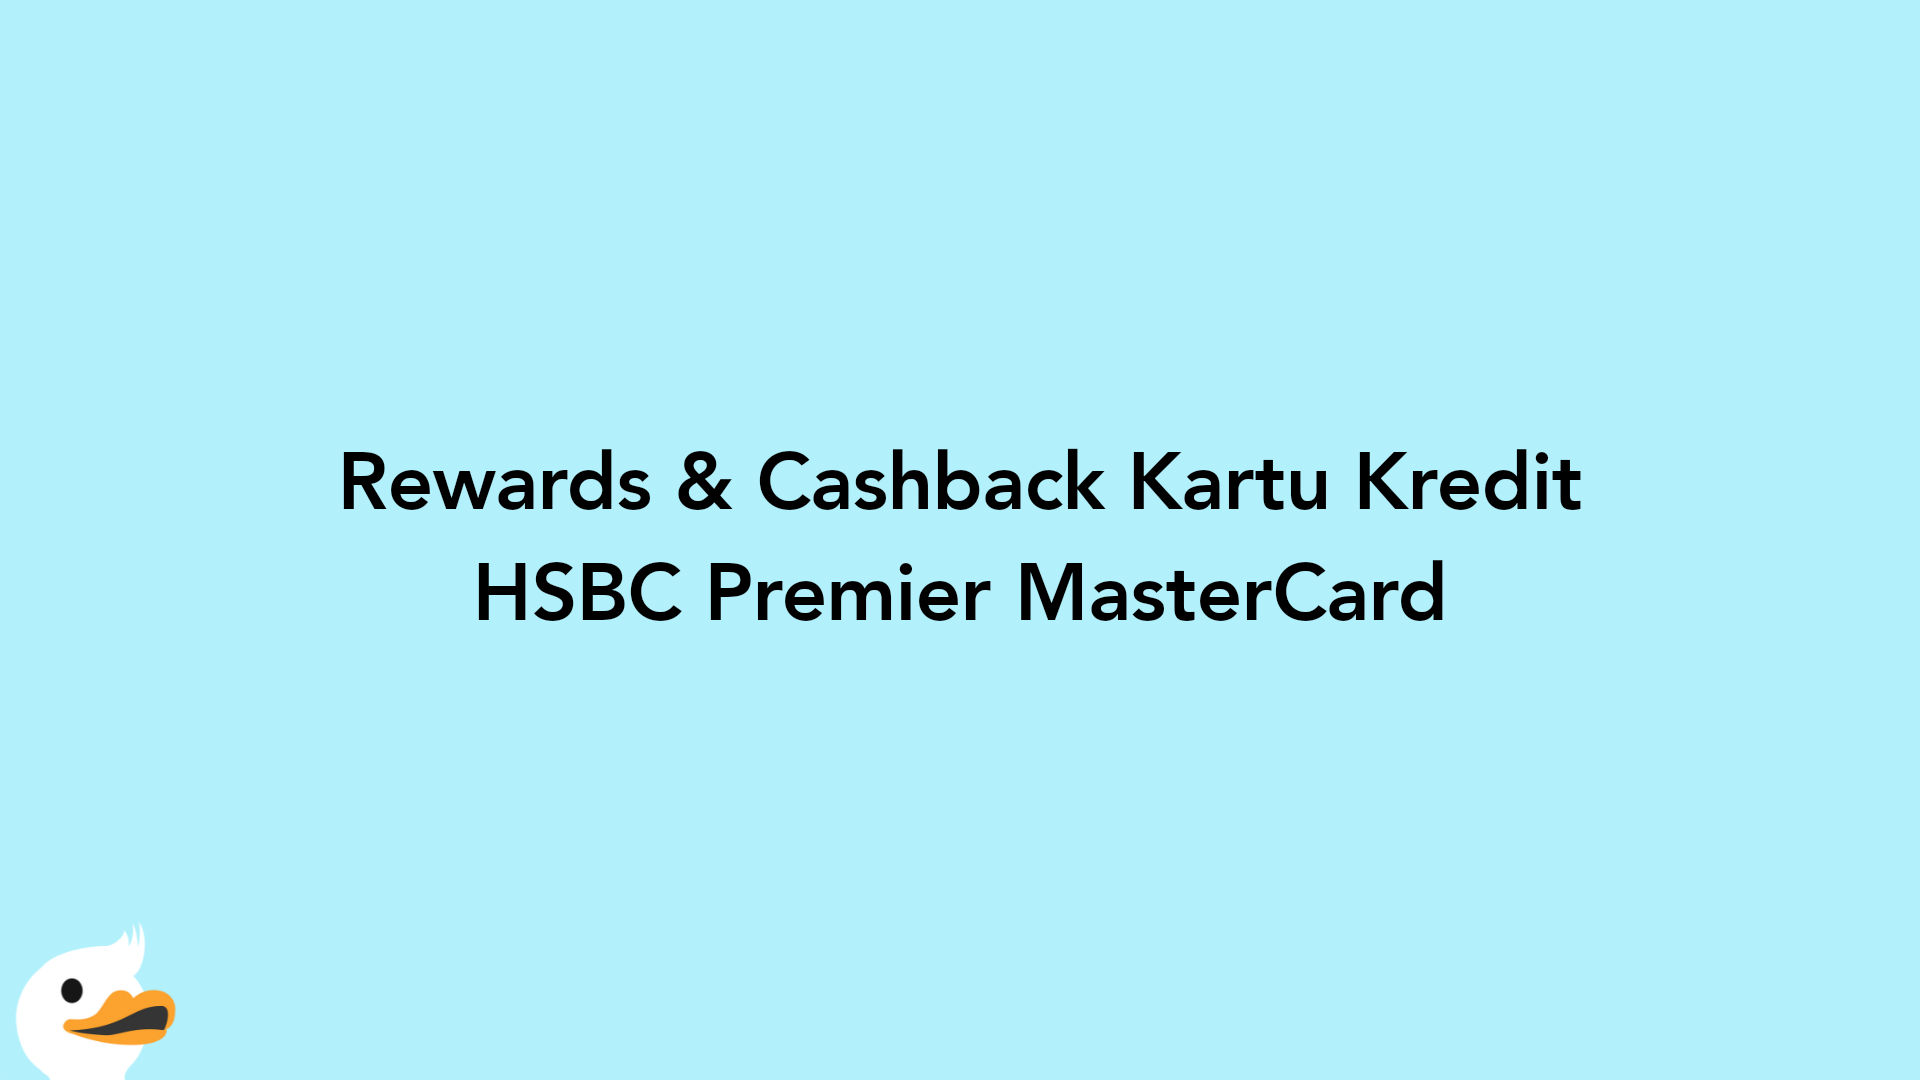 Rewards & Cashback Kartu Kredit HSBC Premier MasterCard